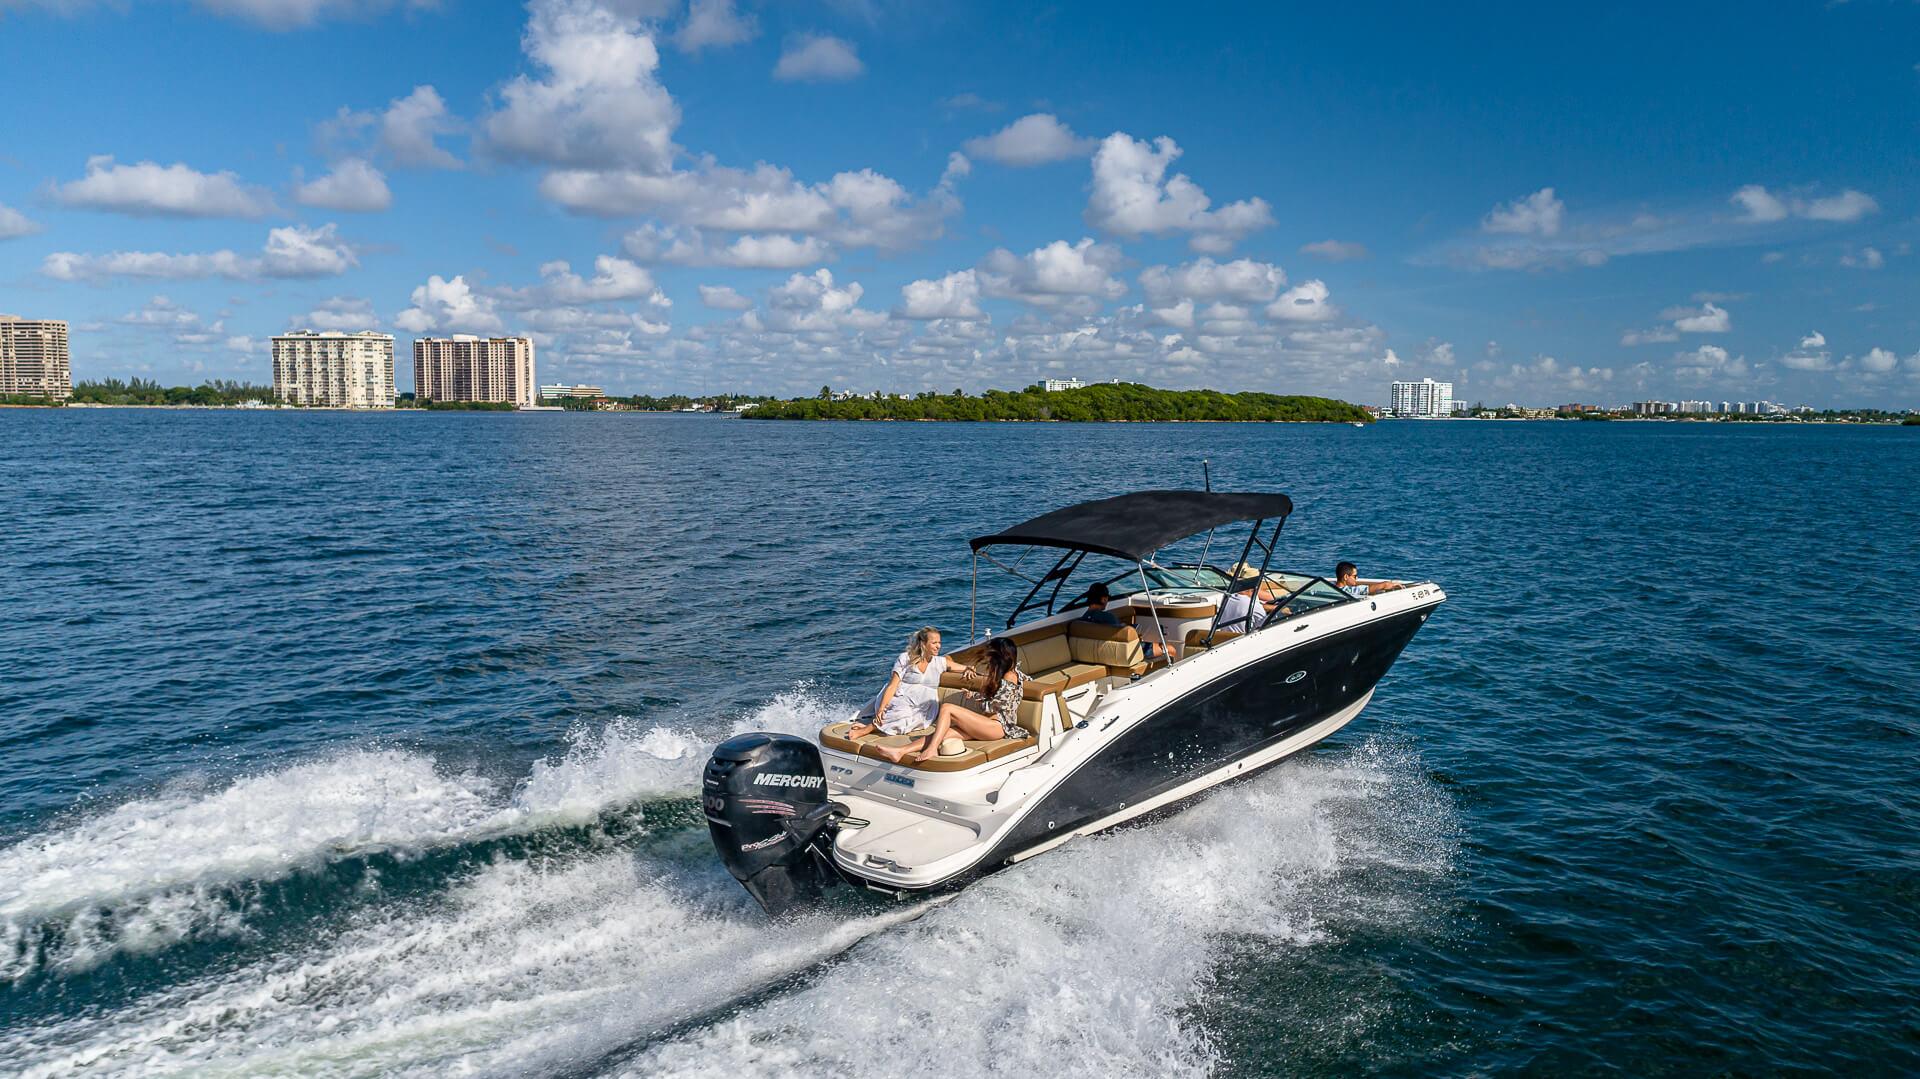 luxury giant boat pictures Miami,luxury giant boat pictures,boat pictures miami